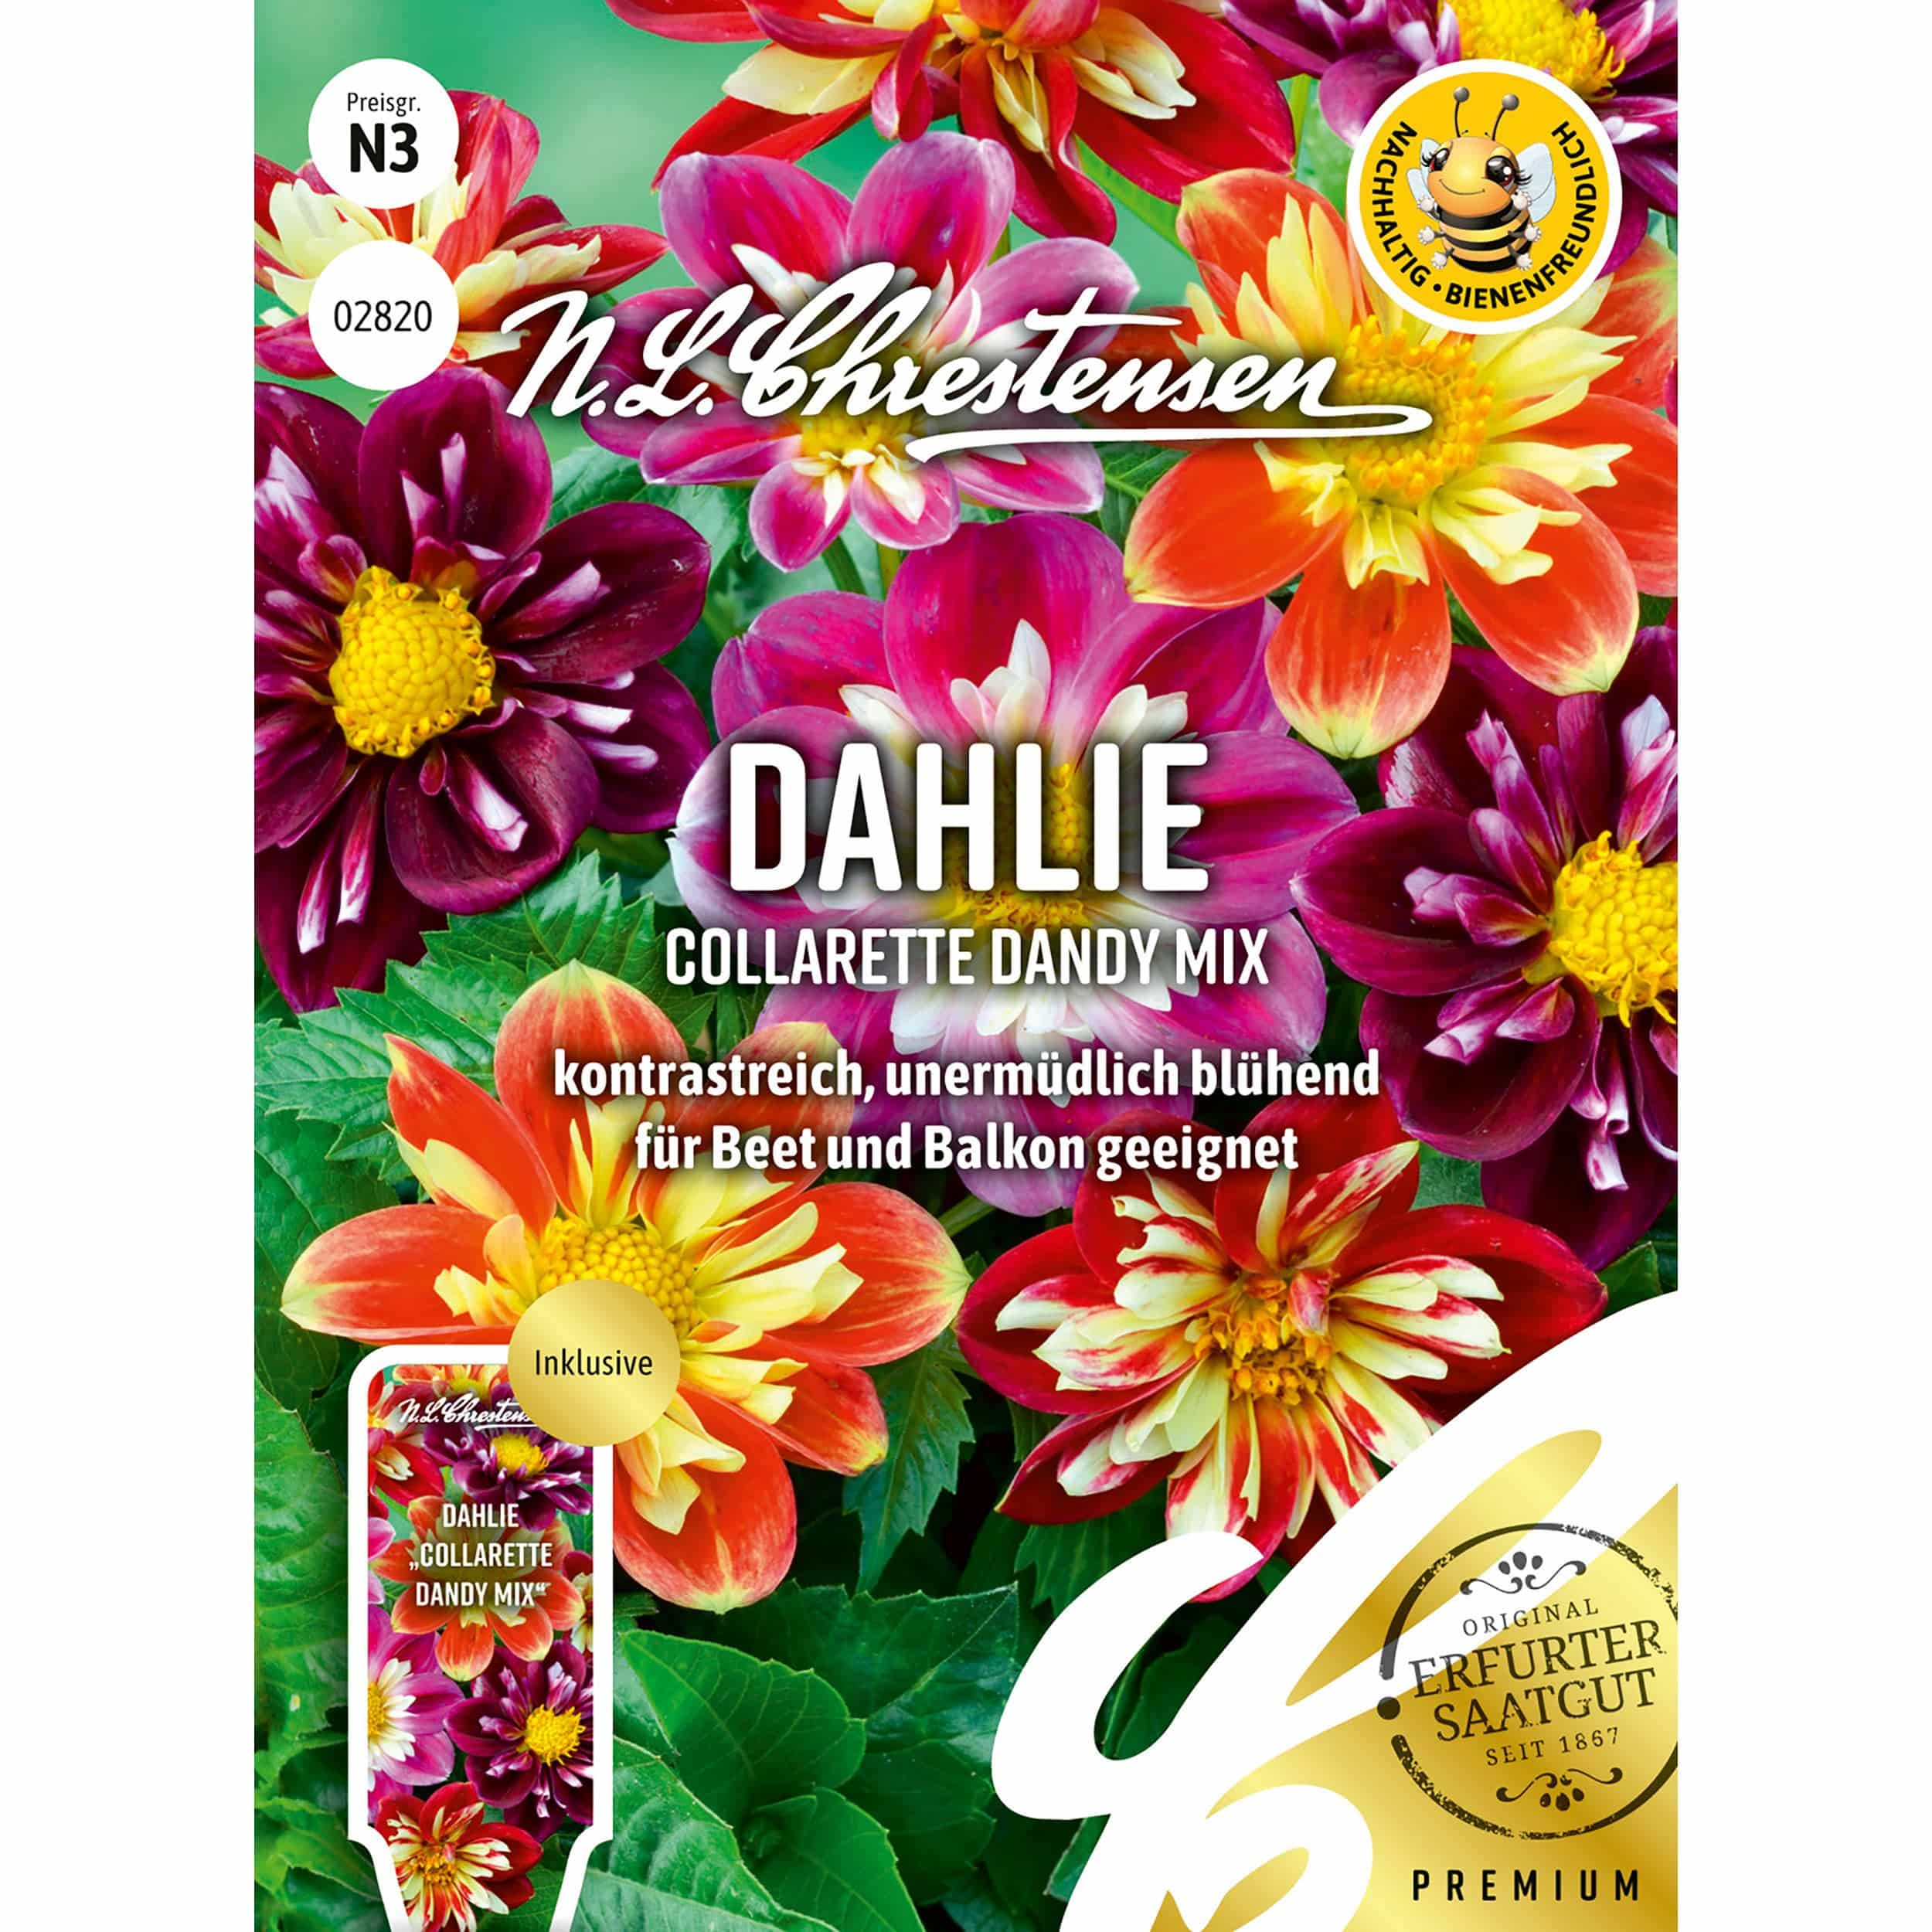 Dahlie Collarette Dandy Mix